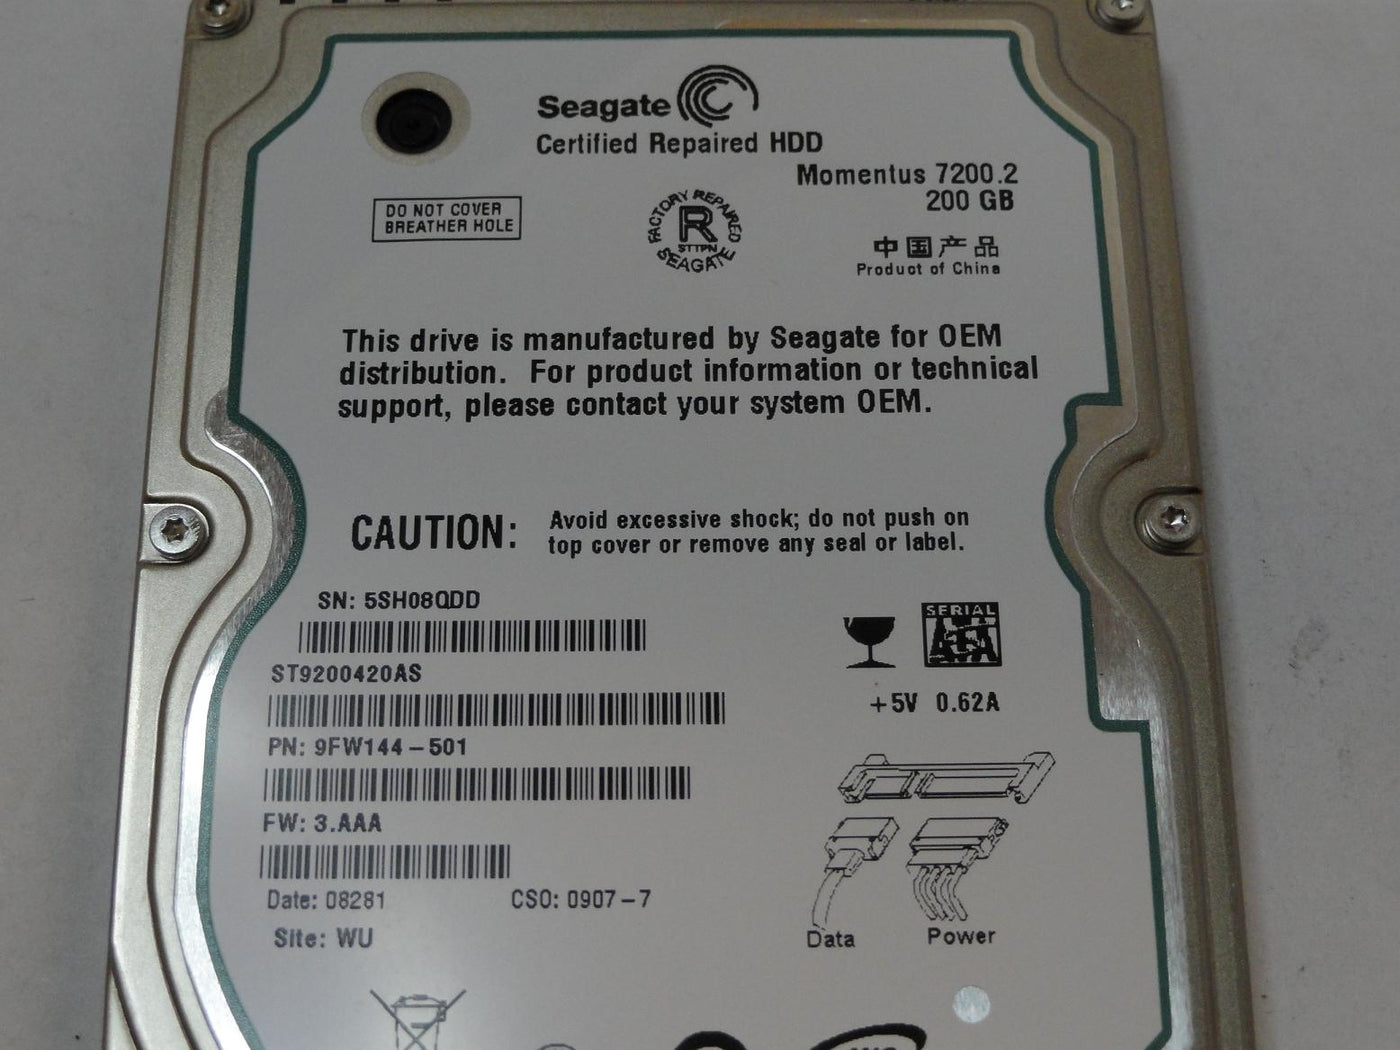 MC5661_9FW144-501_Seagate 200GB SATA 7200rpm 2.5in Recertified HDD - Image3